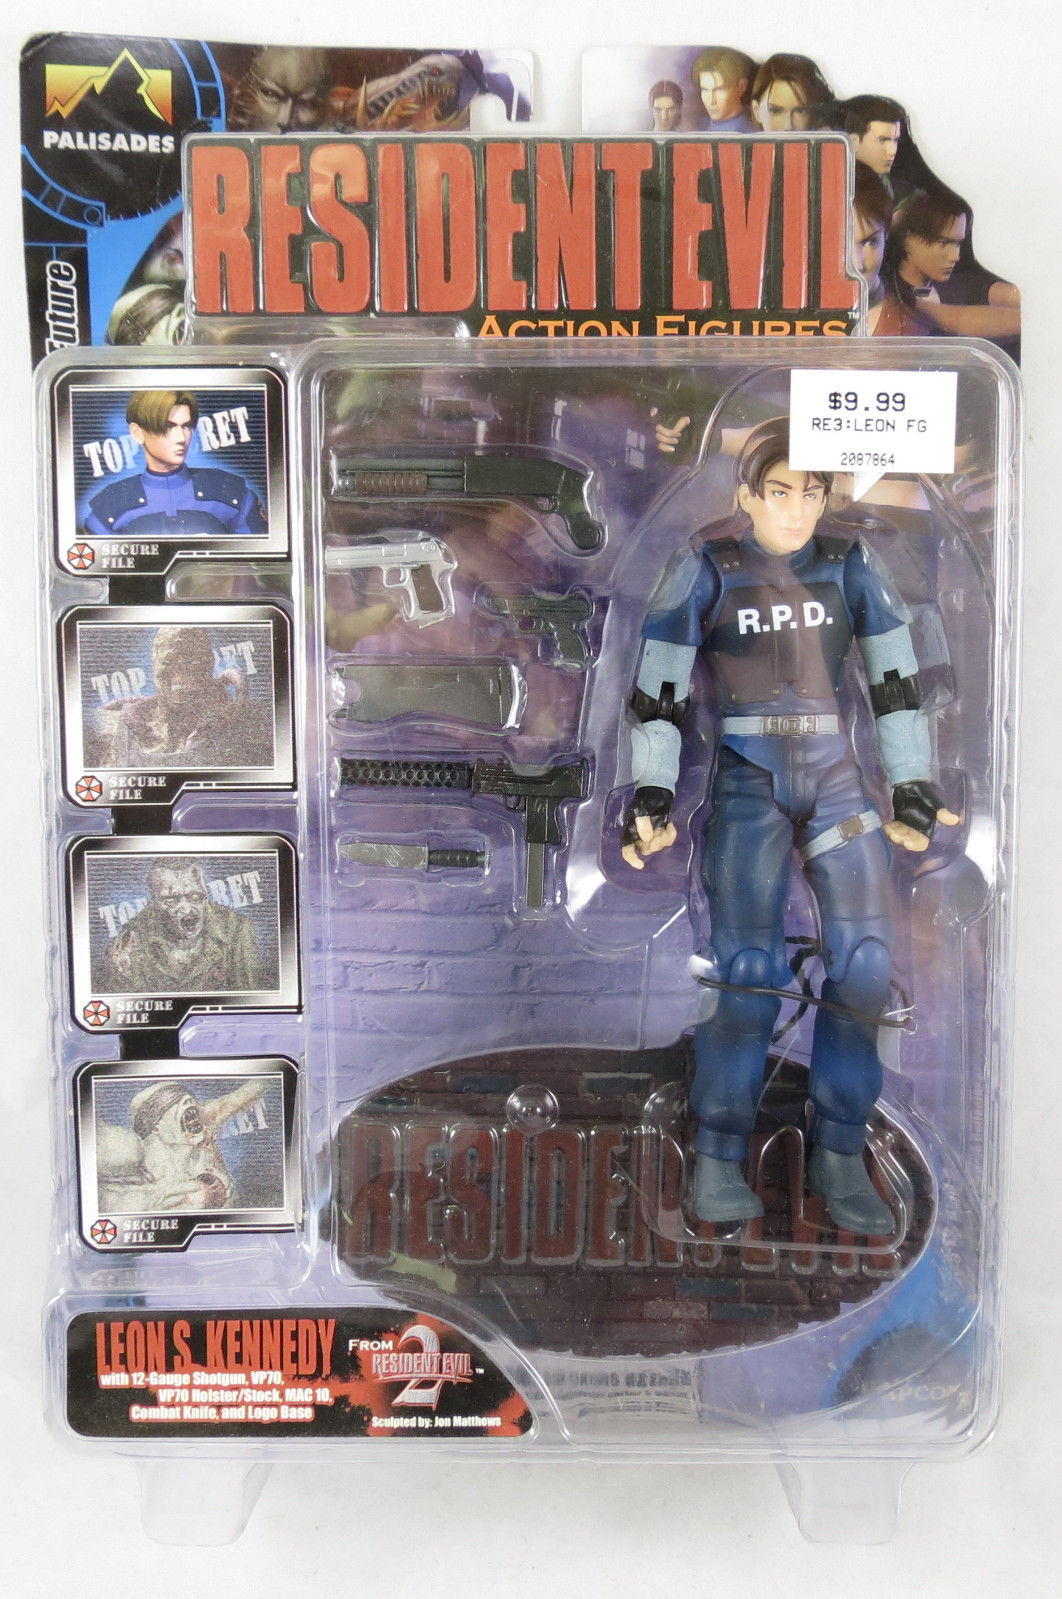 Mr. X, Palisades, Resident Evil Action Figures Series 2, Brand New  Biohazard